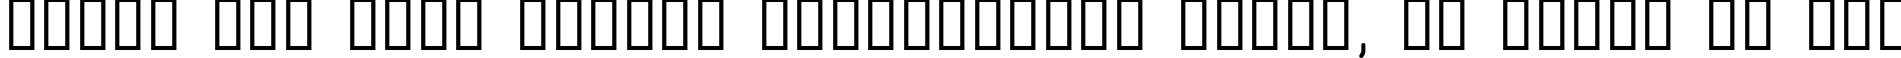 Пример написания шрифтом Aunchanted Xspace Bold текста на русском